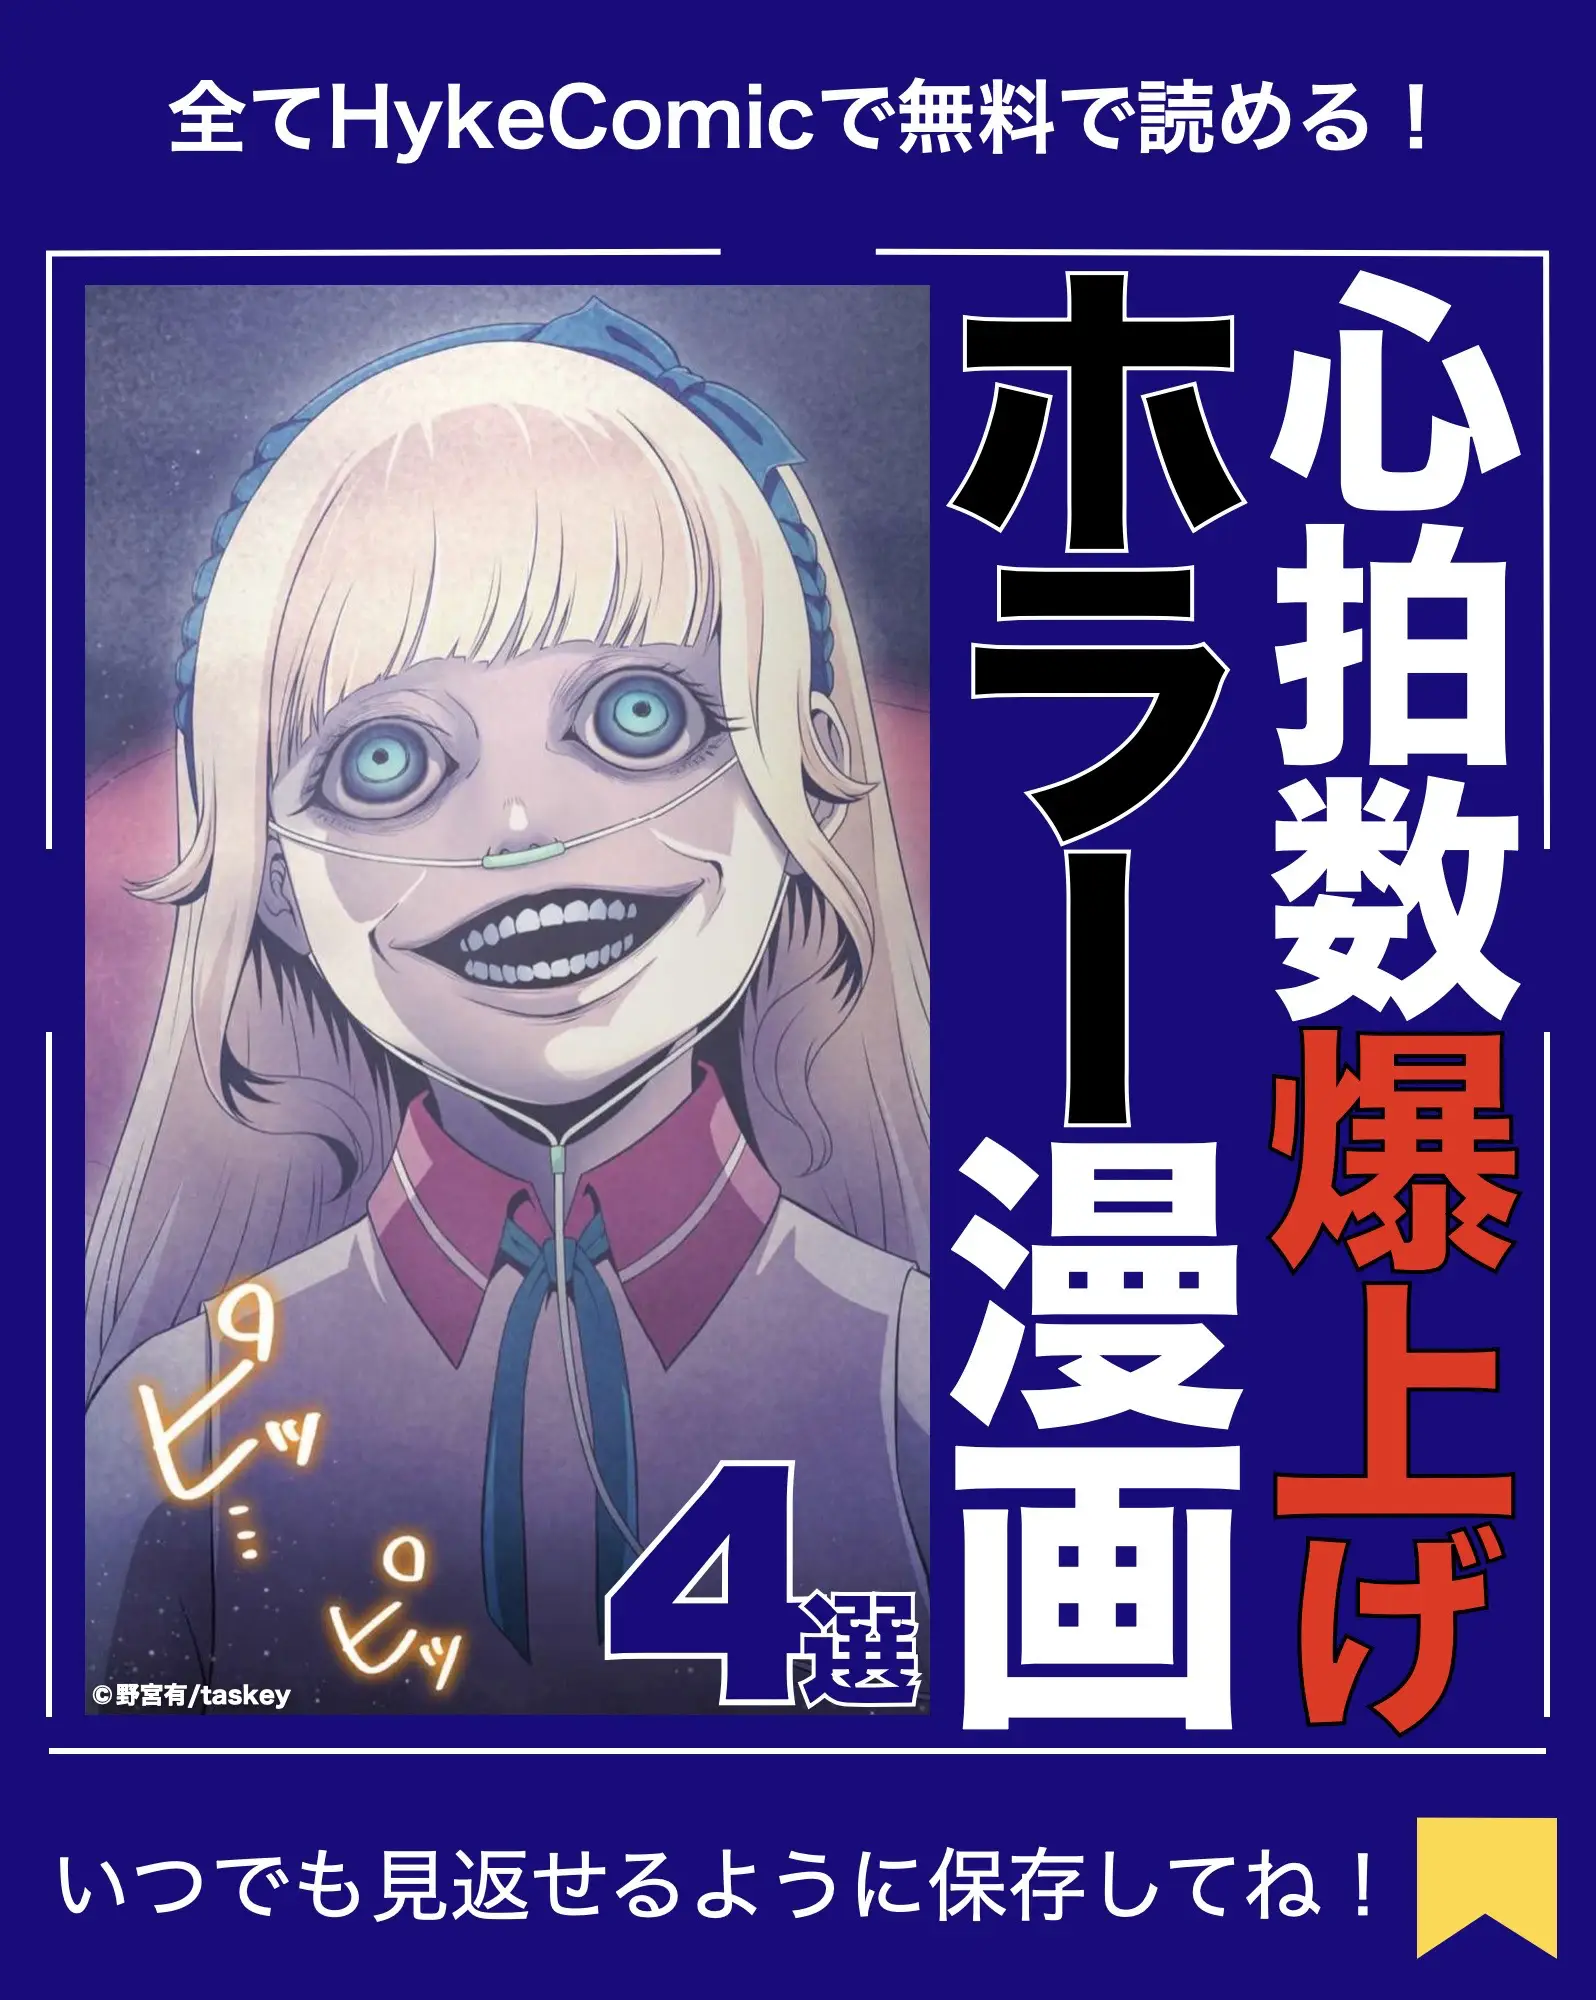 Killing Stalking Manga Vol.1-5 Set Comic Japanese Ver. Psycho Horror 